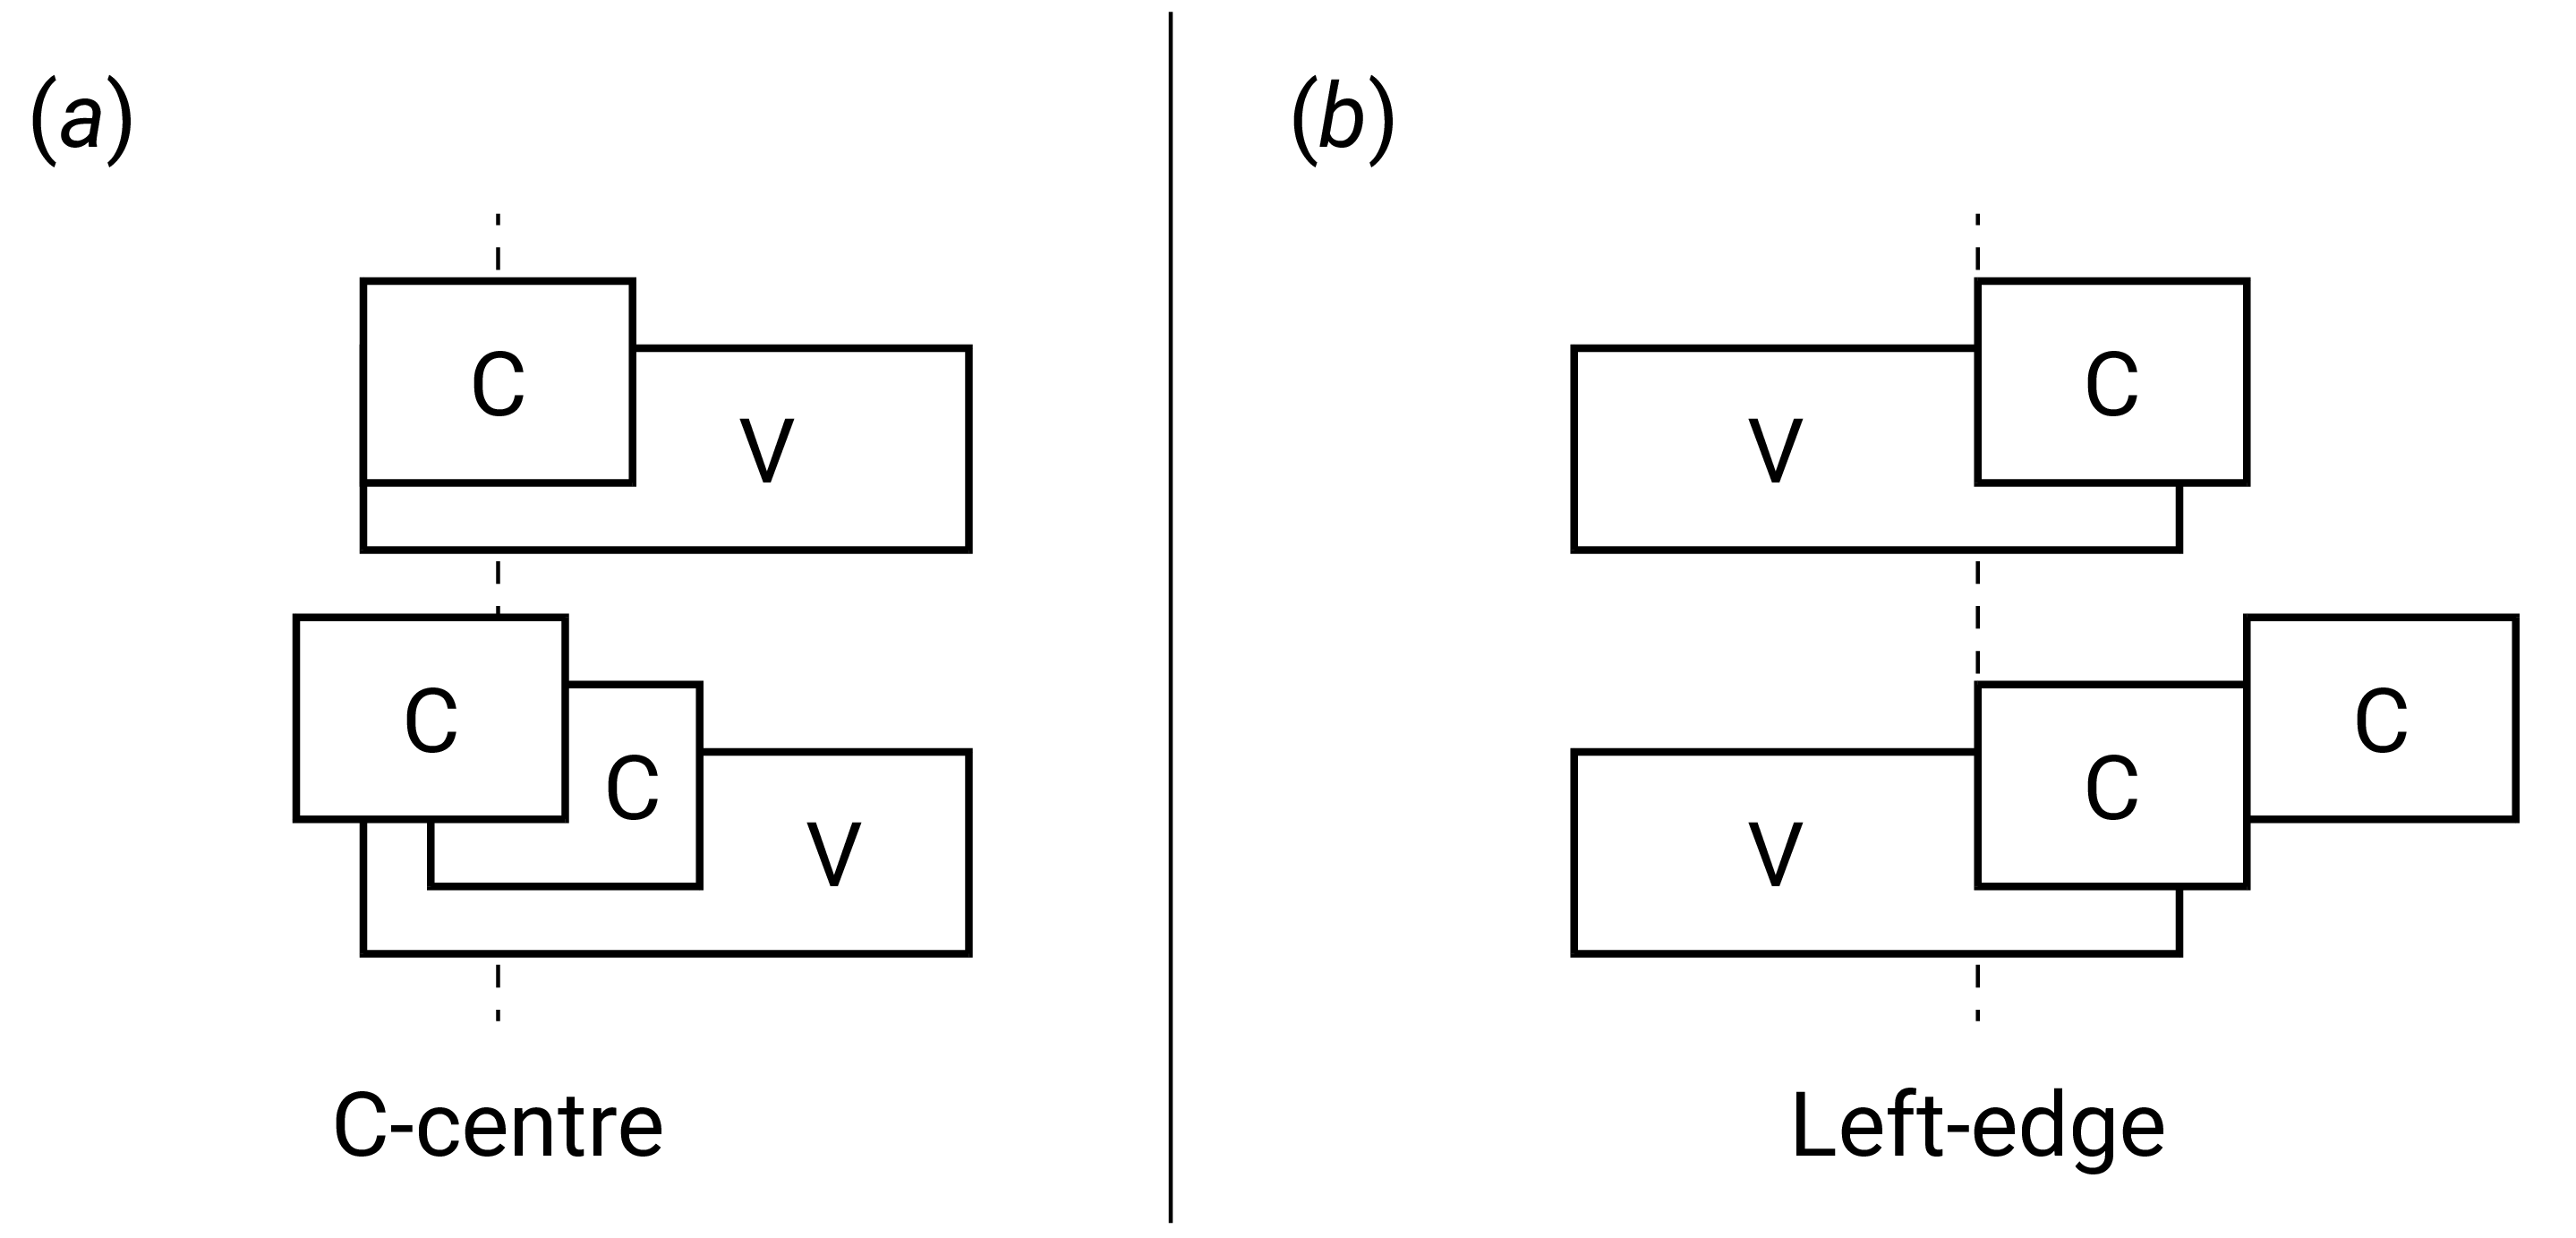 Gestural organisation patterns for onsets (a) and codas (b). C = consonant, V = vowel [design based on @marin2010].